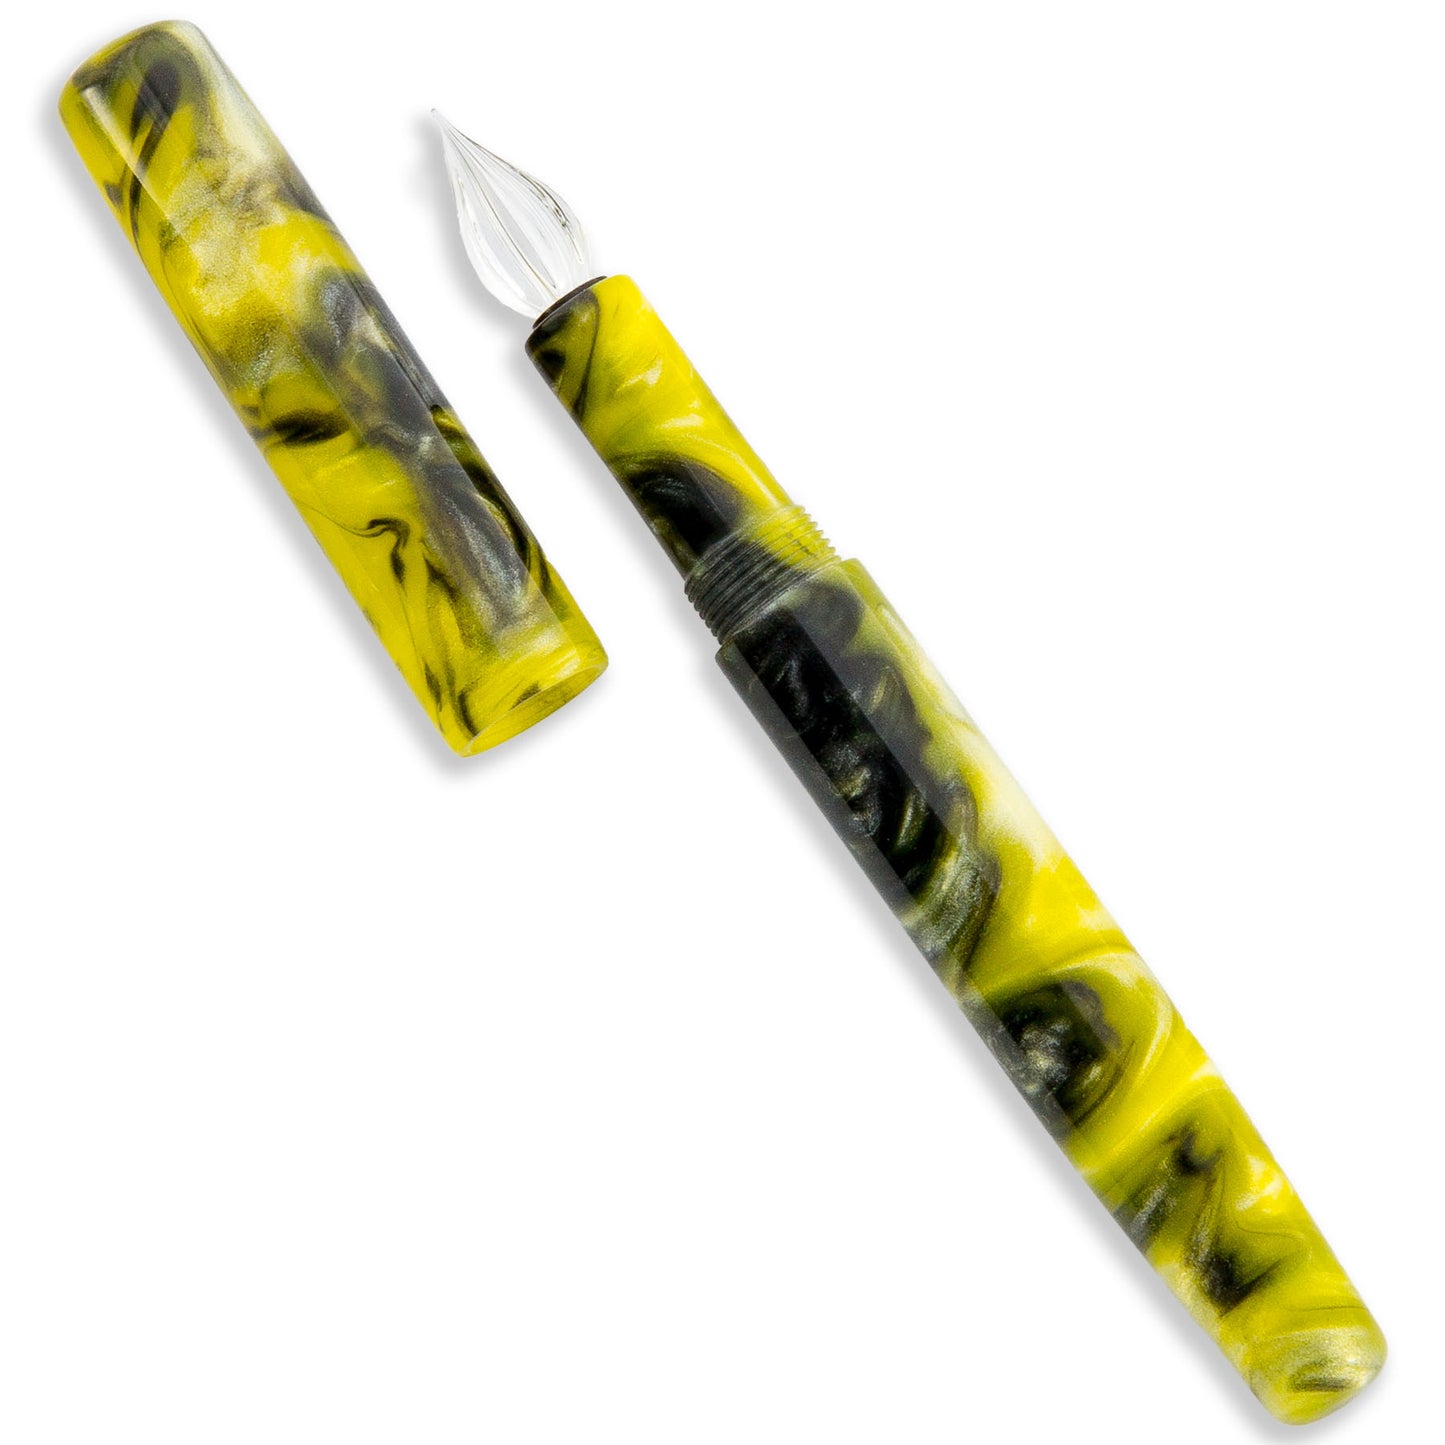 GW Glass Nib Dip Pen Yellow and Black